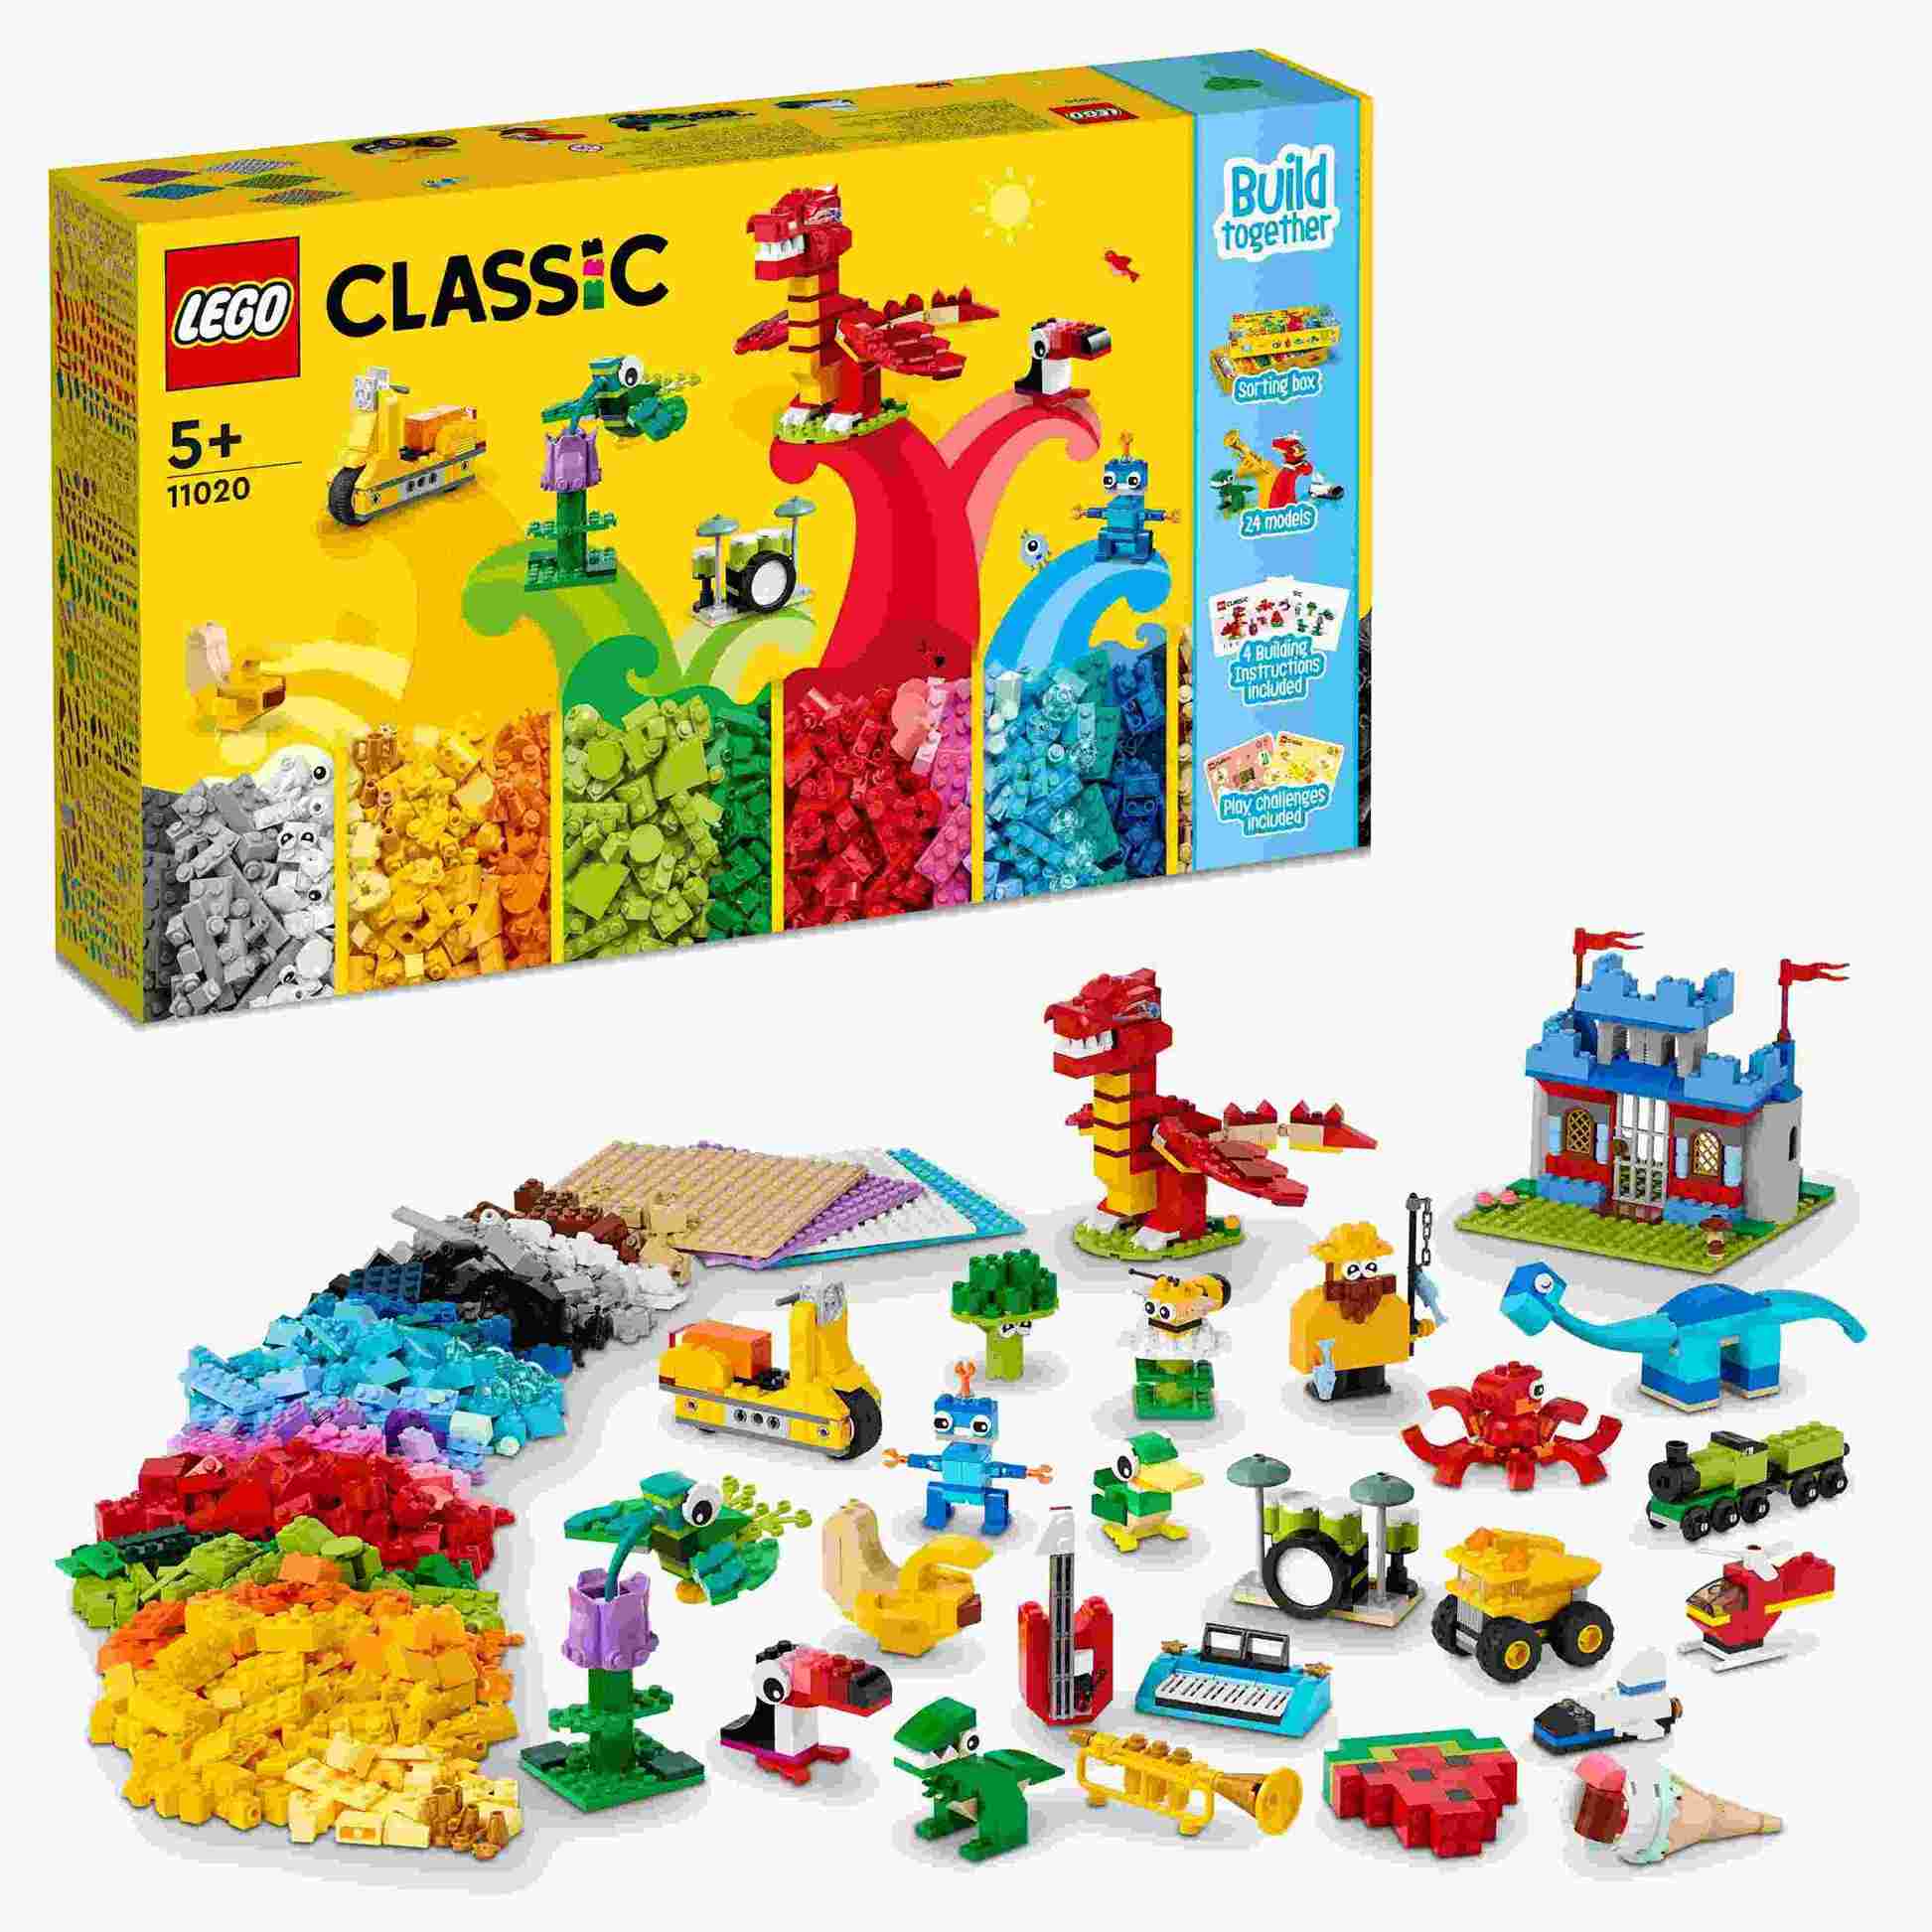 Lego classic build together 11020 - LEGO, LEGO Classic